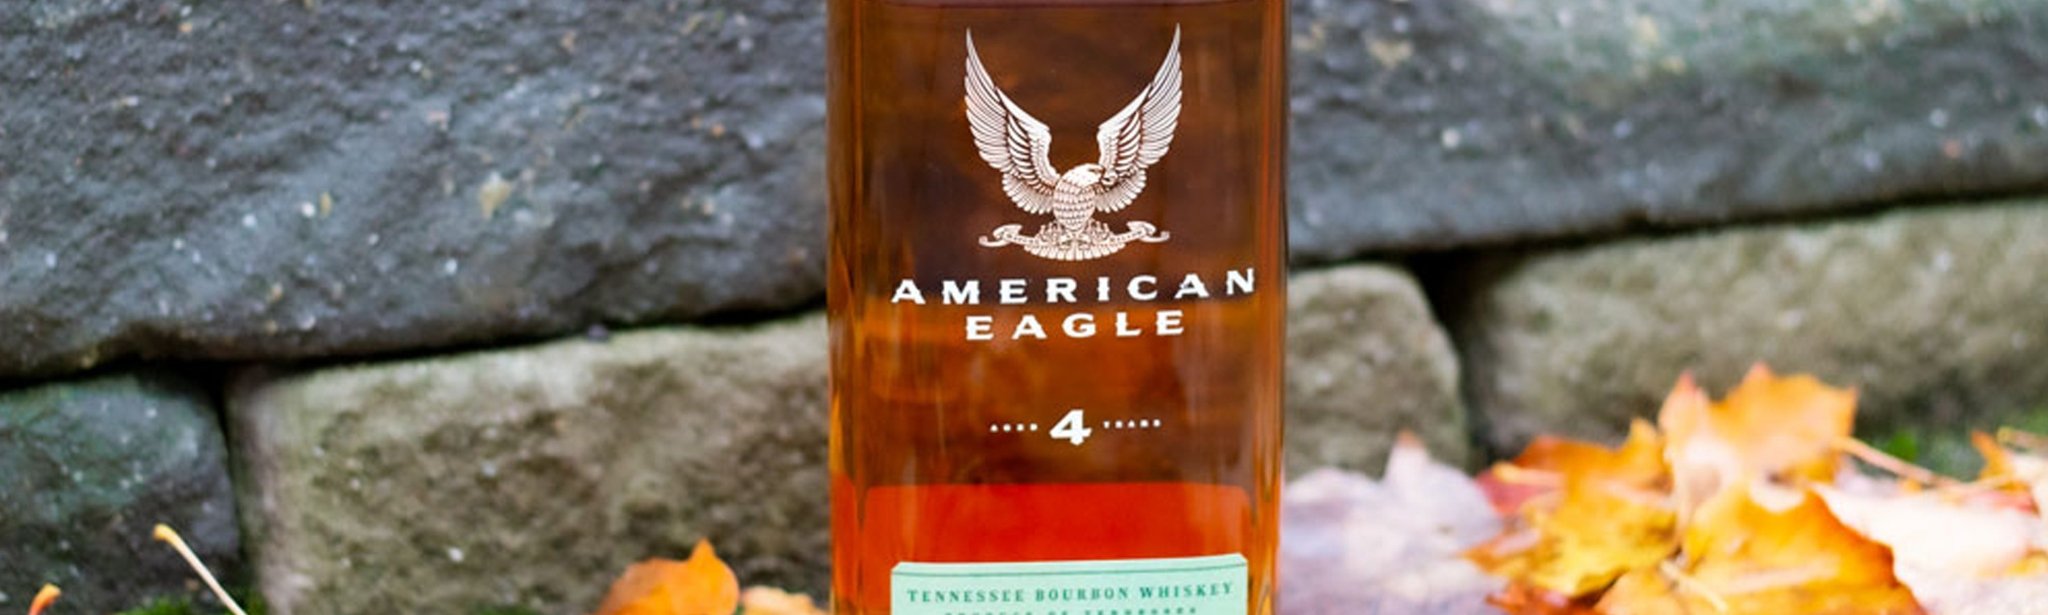 American Eagle - The Bottle Club